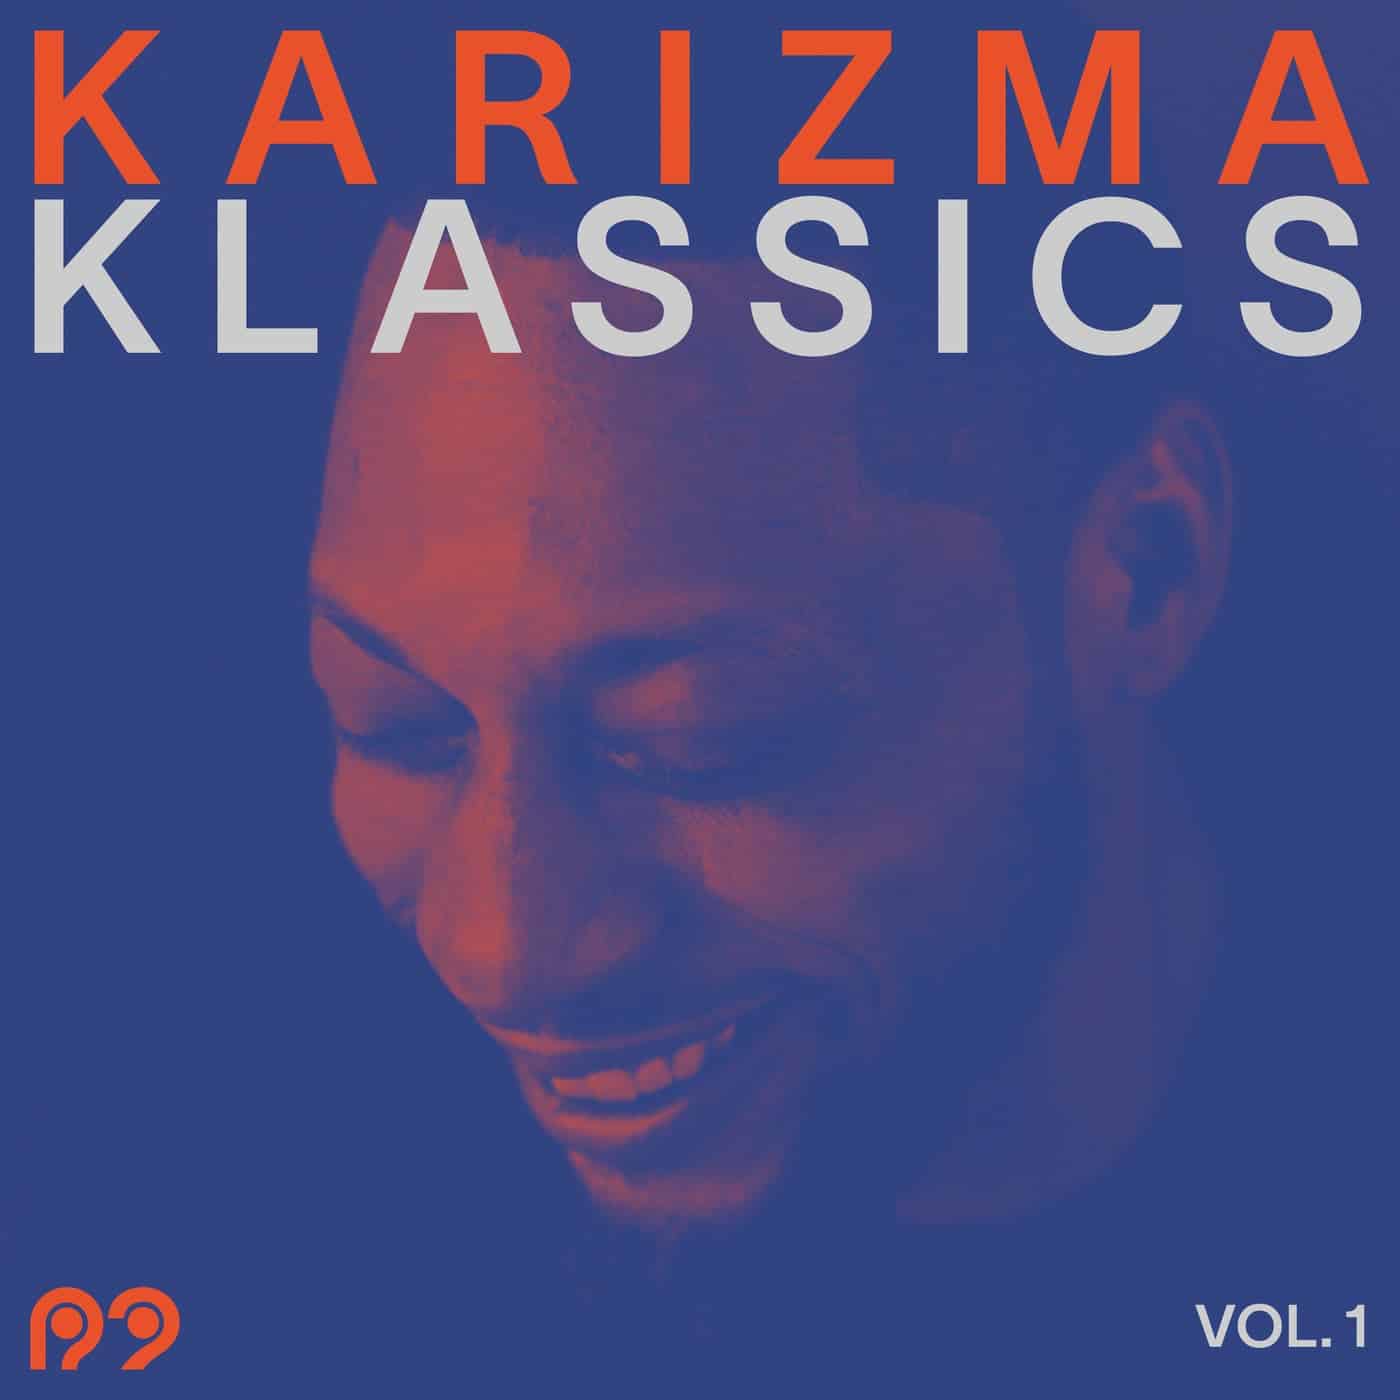 Download Karizma, Nicholas Ryan Gant - Karizma Klassics Vol. 1 on Electrobuzz